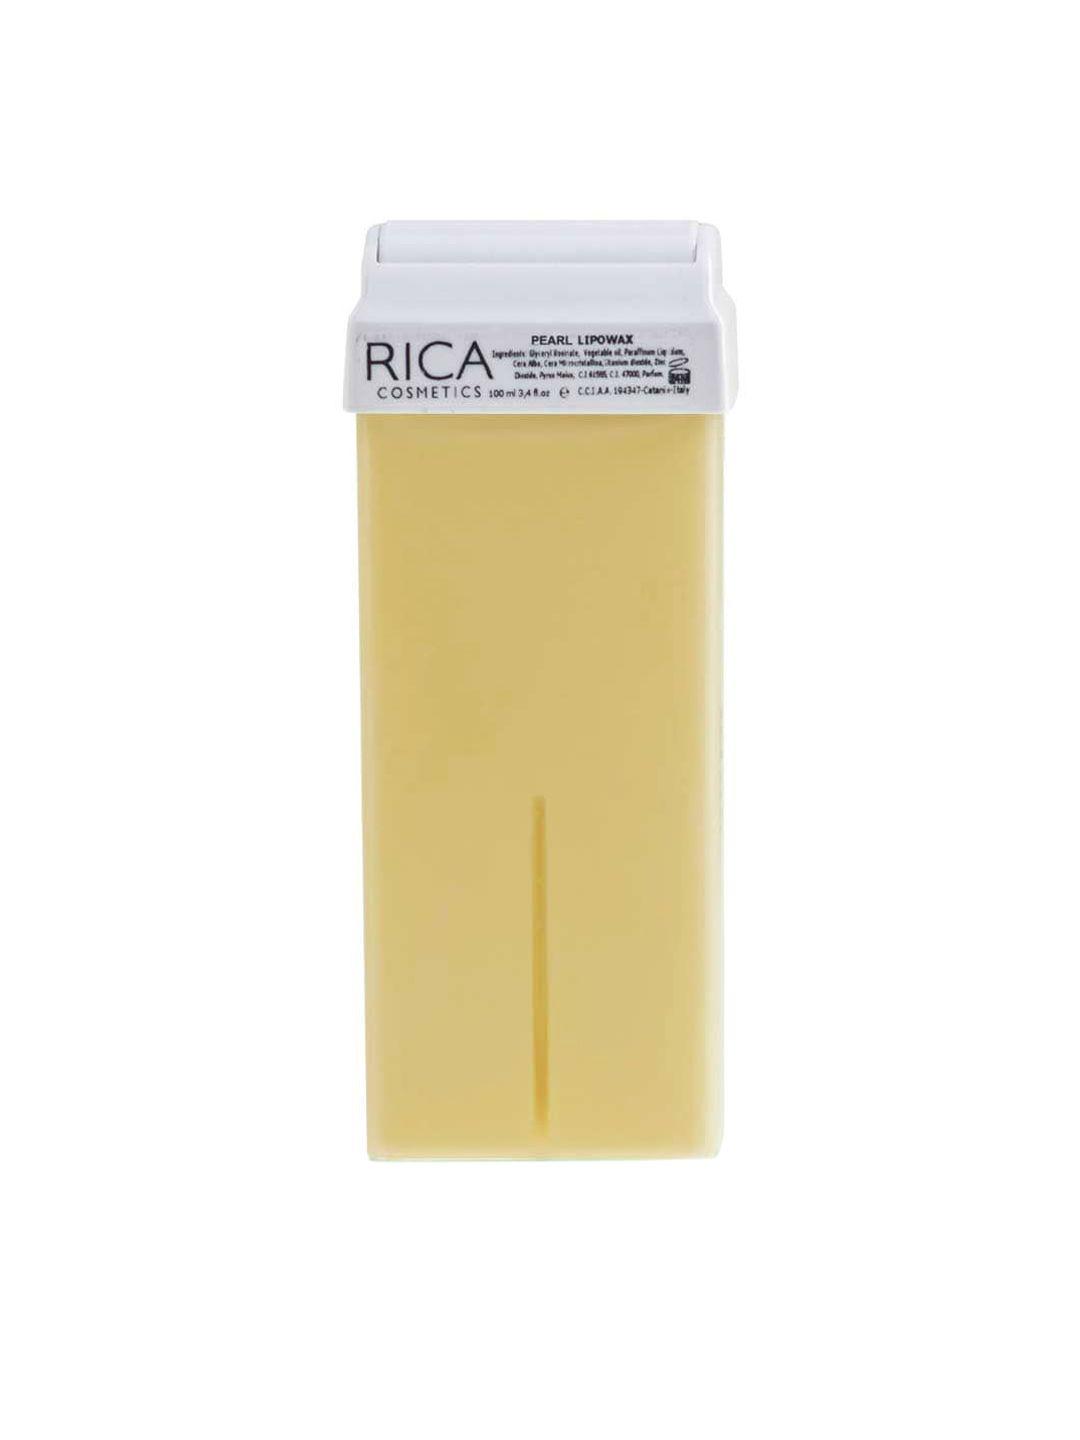 rica unisex white pearl lipowax - 100 ml